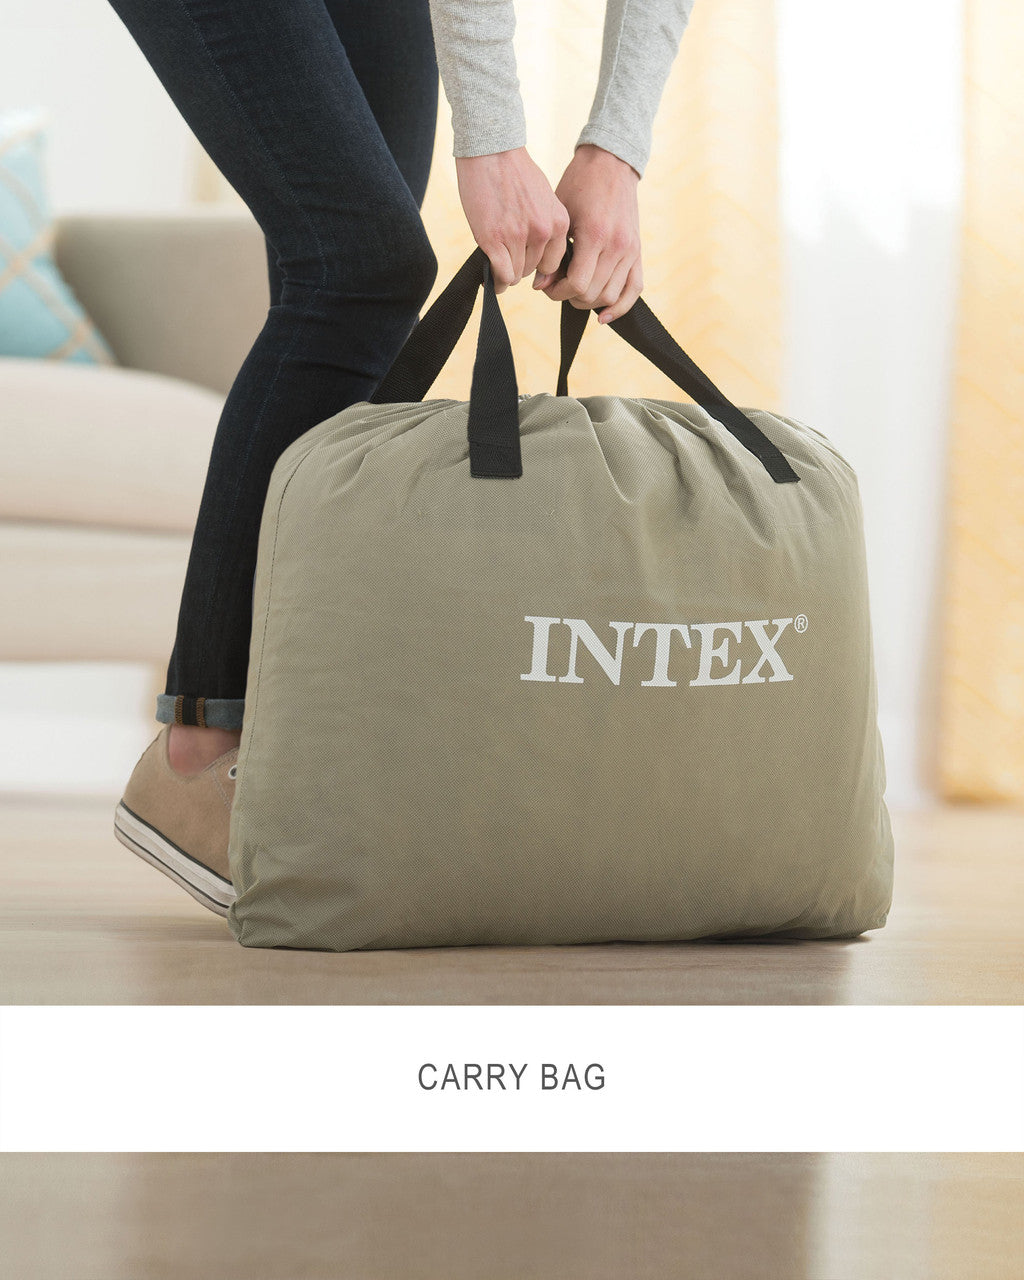 Intex Dura Beam Plus Series Deluxe Pillow Rest Raised Air Mattress